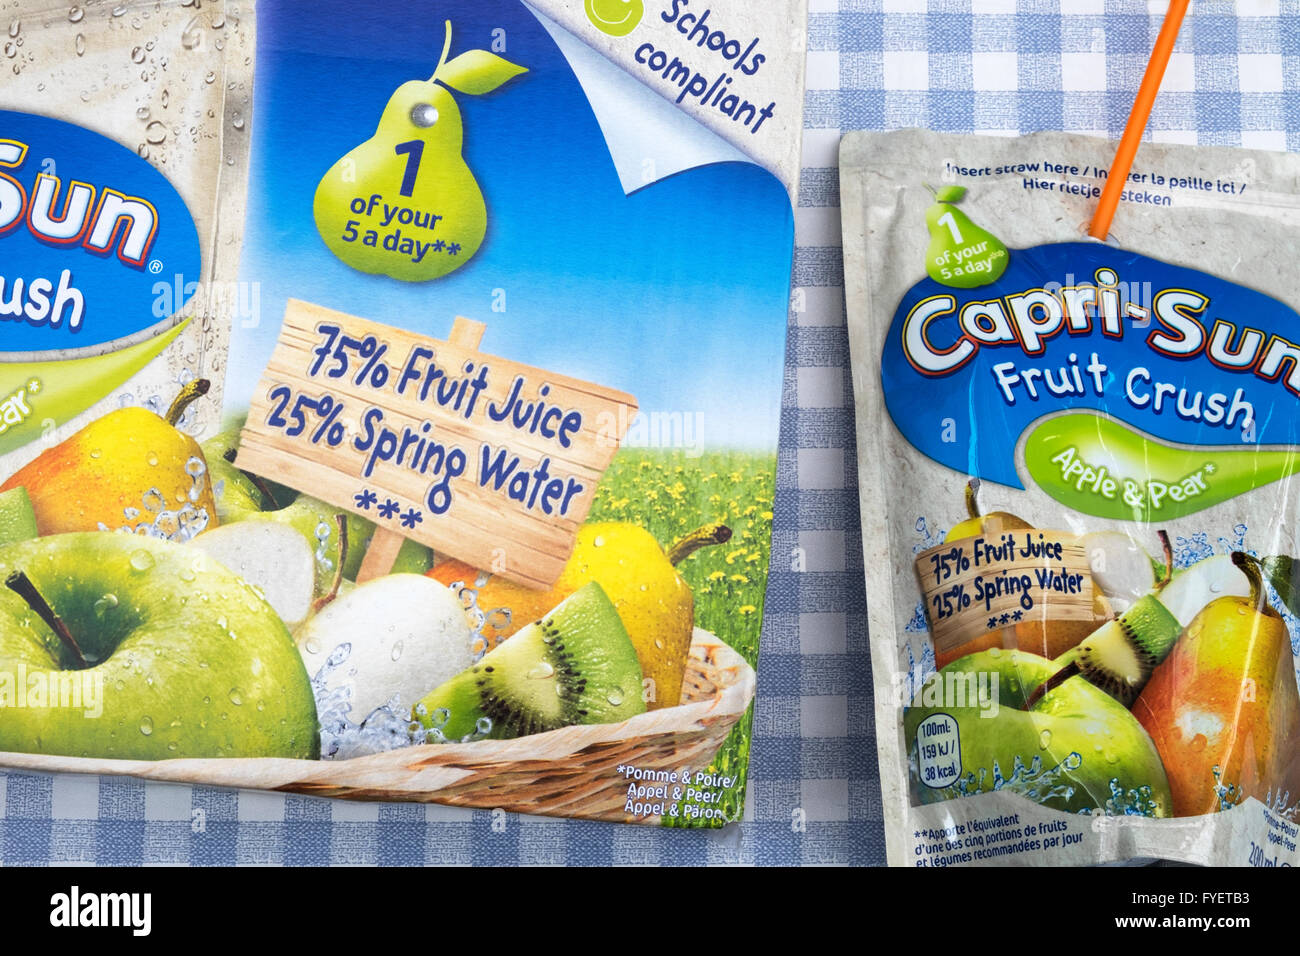 Capri-Sun Apple and Pear Fruit Crush drink Stock Photo